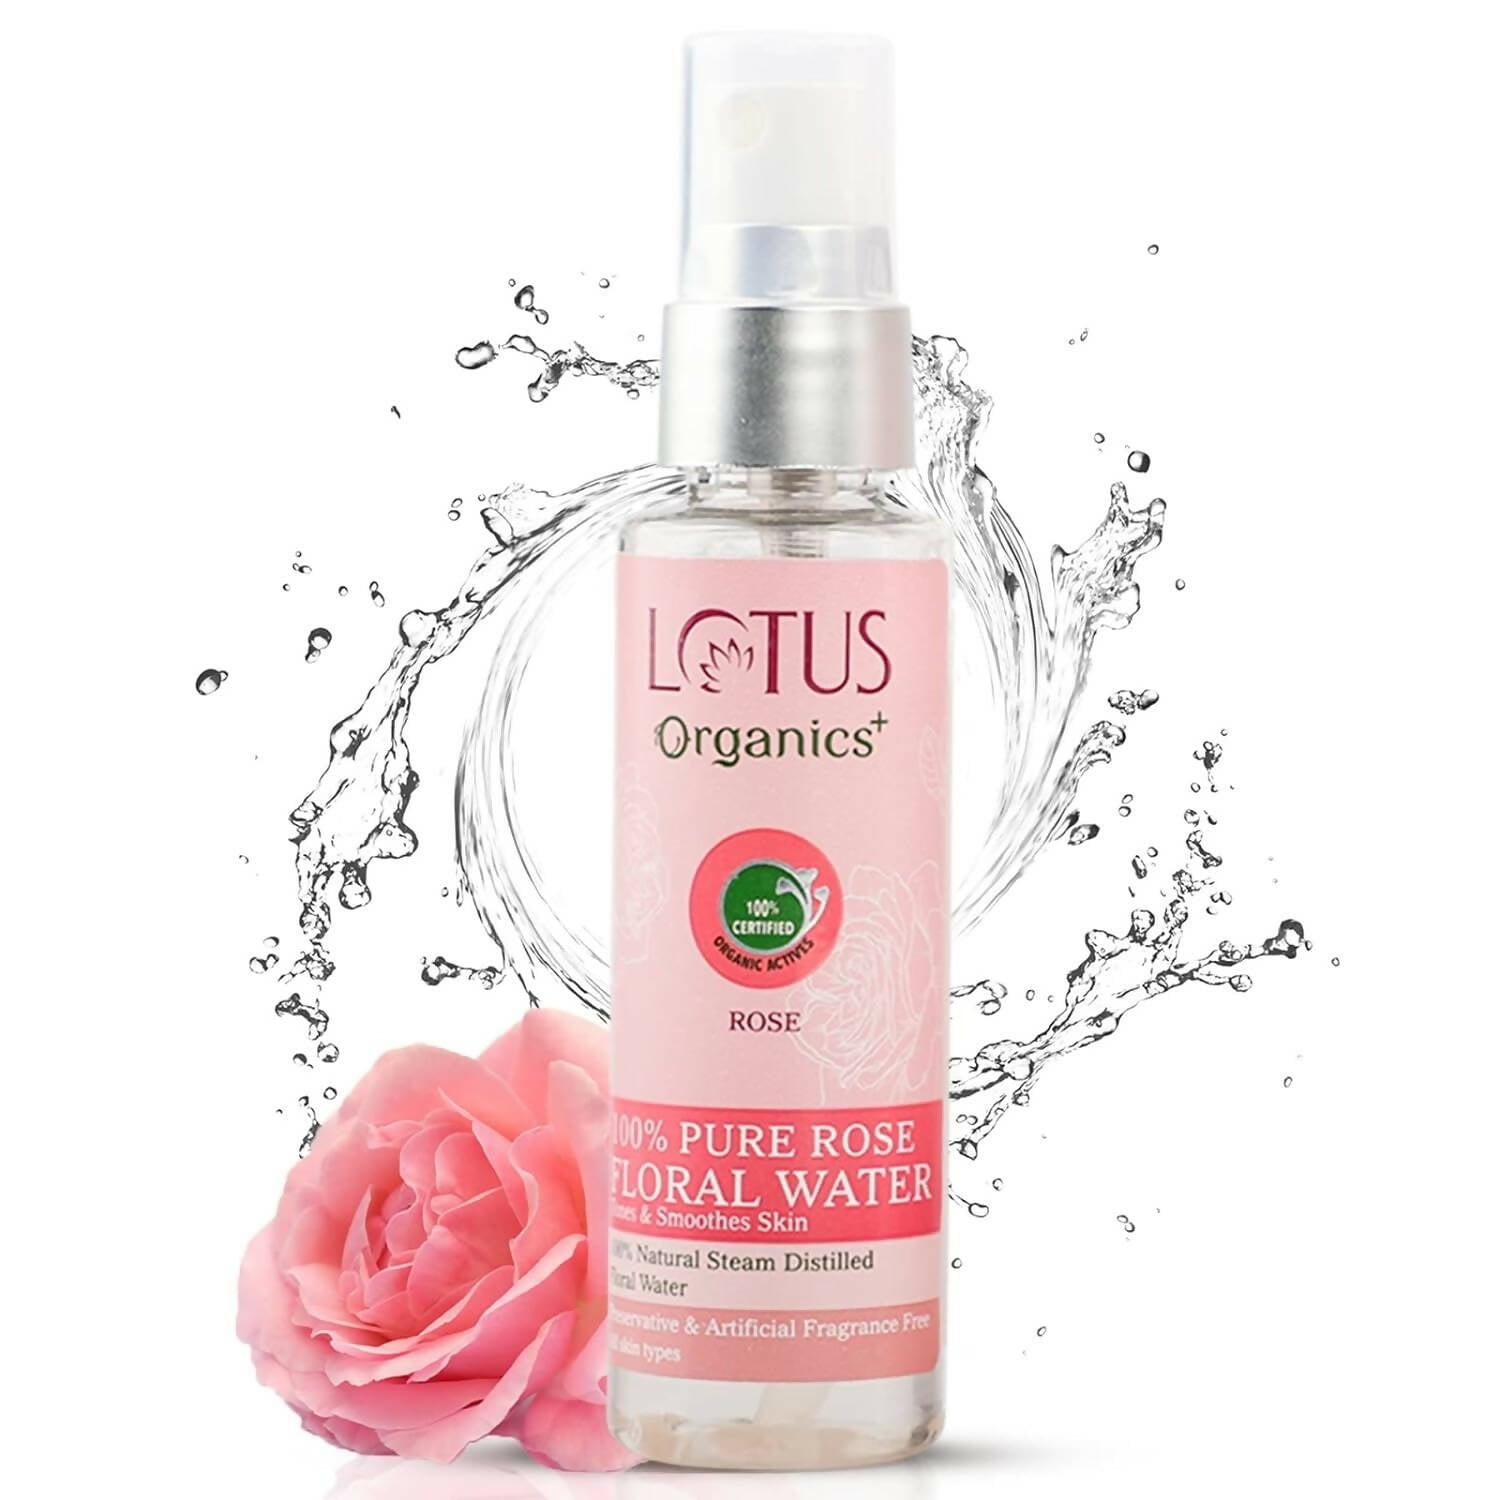 Lotus Organics+ 100% Pure Rose Floral Water - BUDNEN